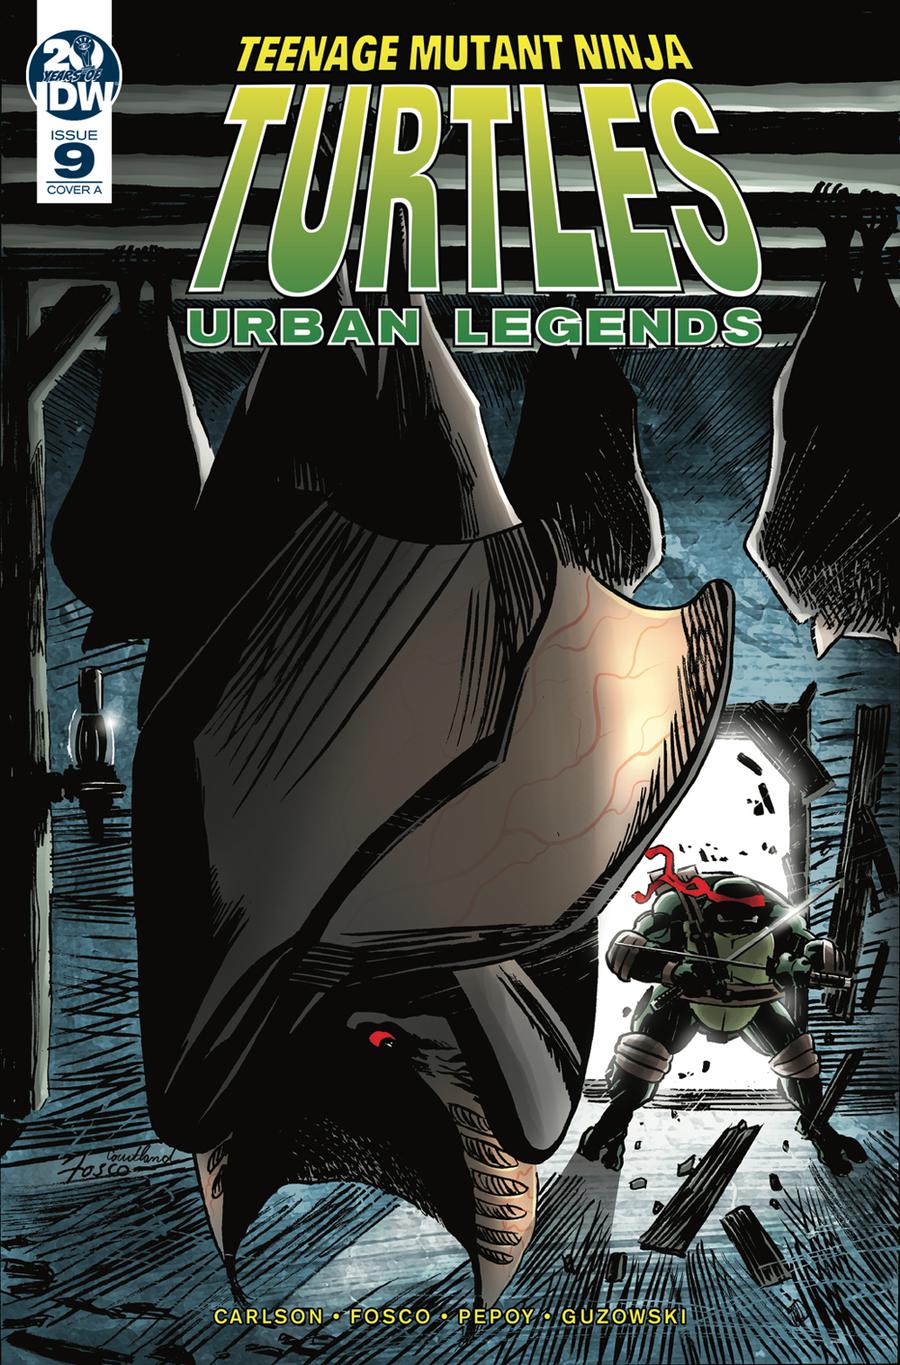 Teenage Mutant Ninja Turtles Urban Legends #9 Cover A Regular Frank Fosco Cover